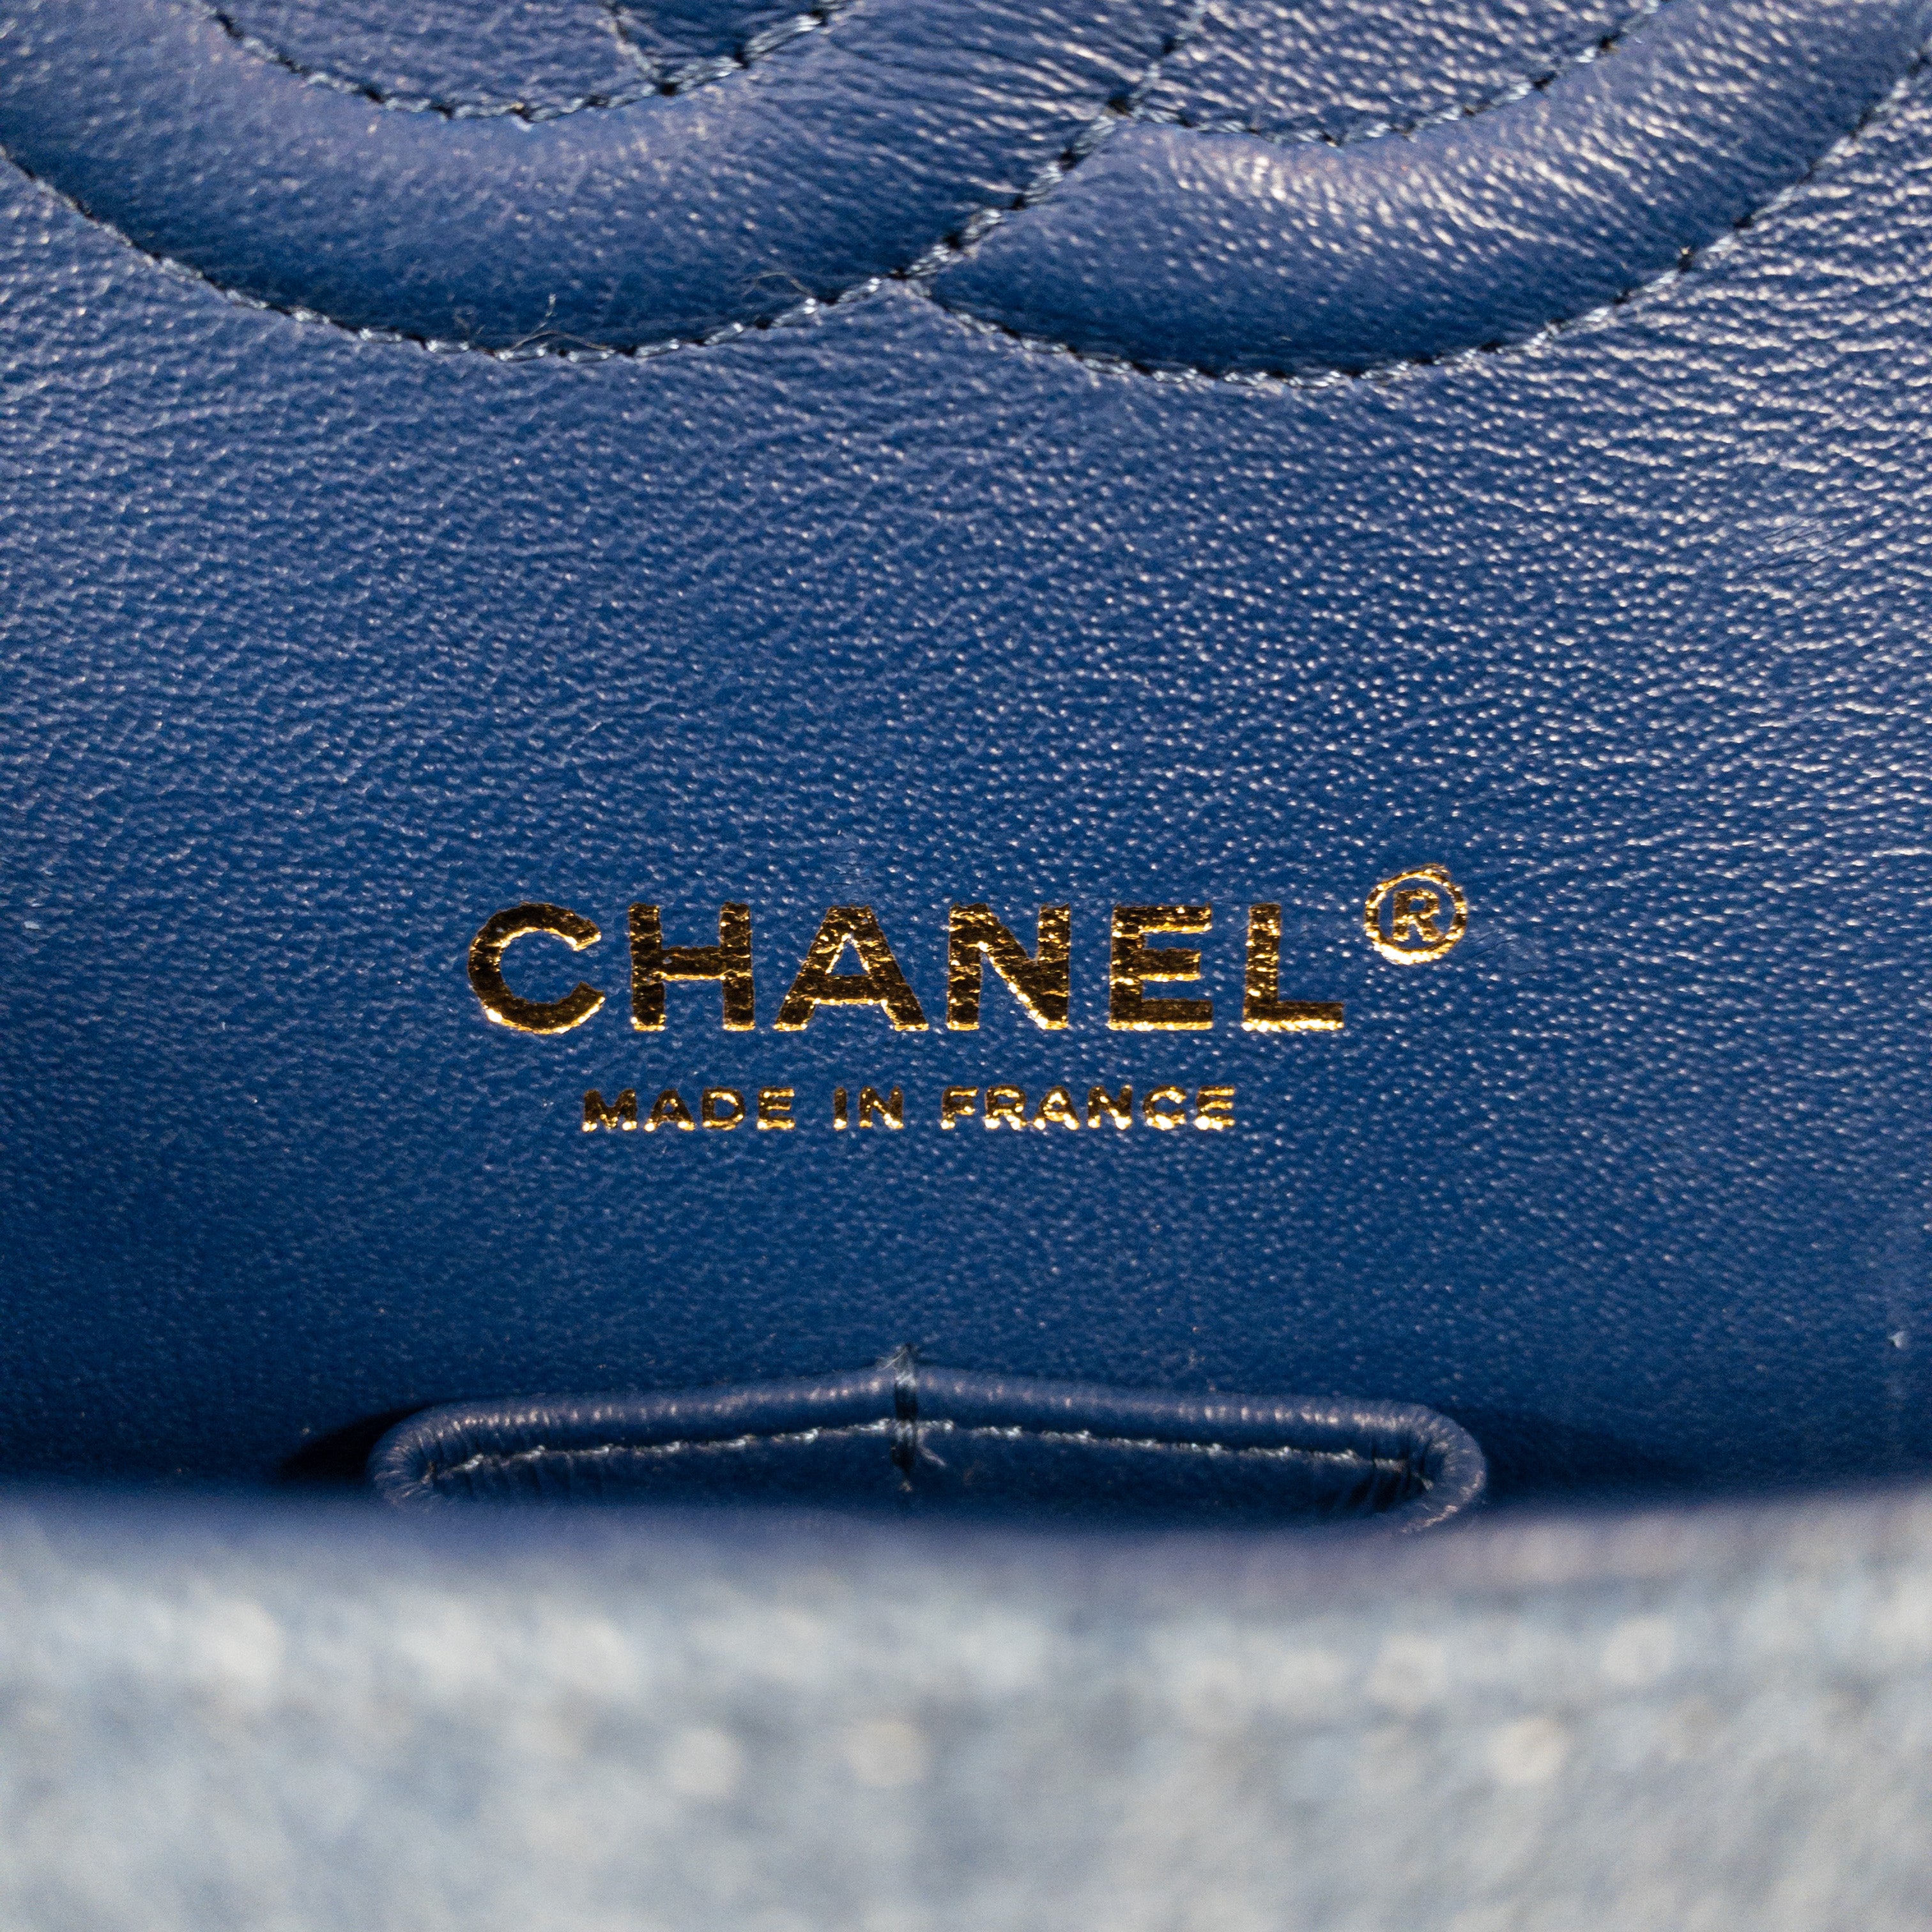 Brand New Chanel Classic Medium